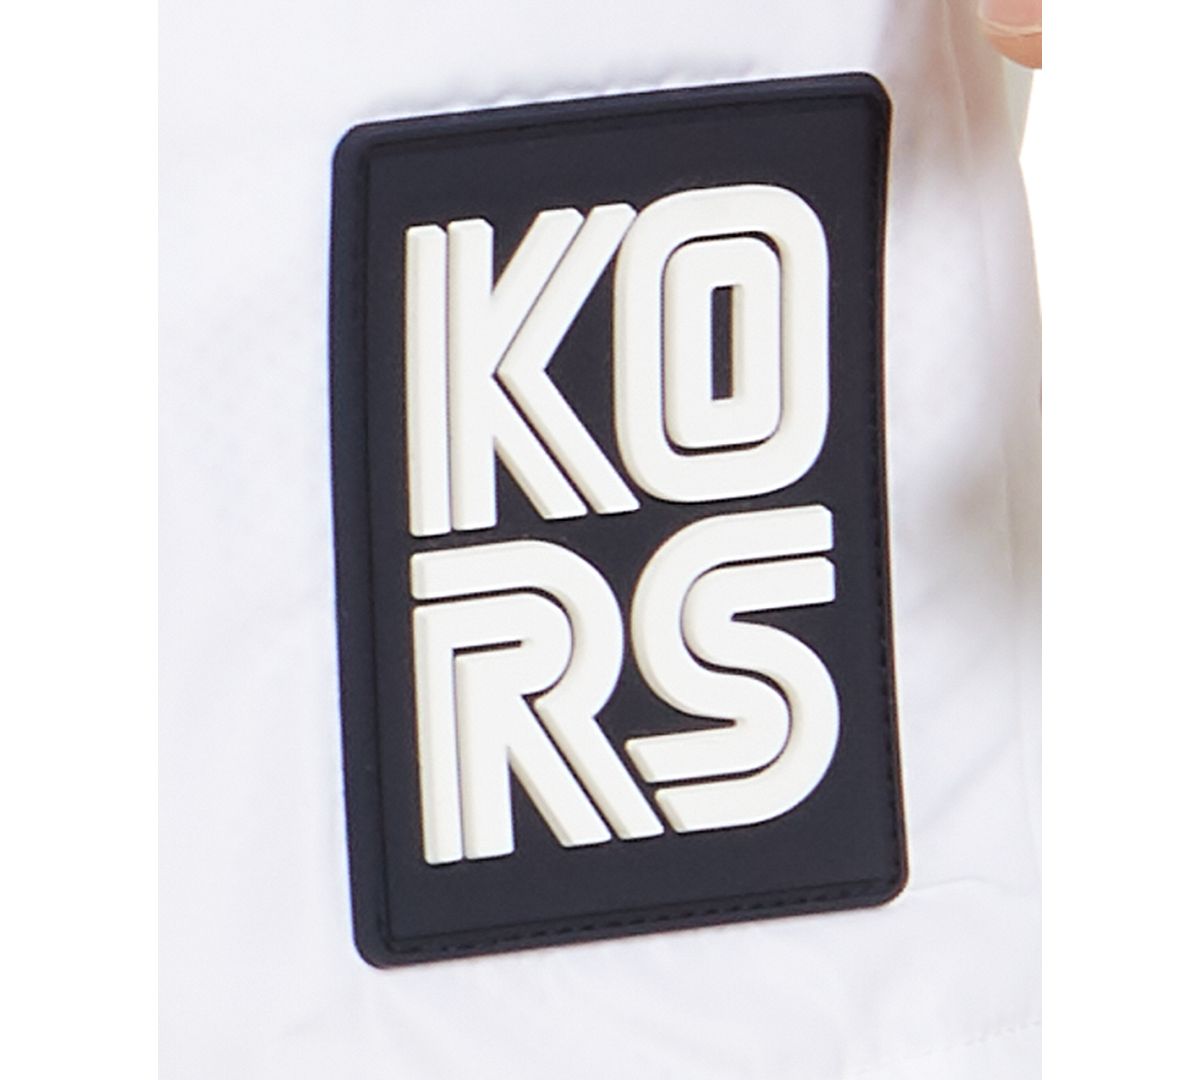 Michael Kors Logo Sport Shorts White